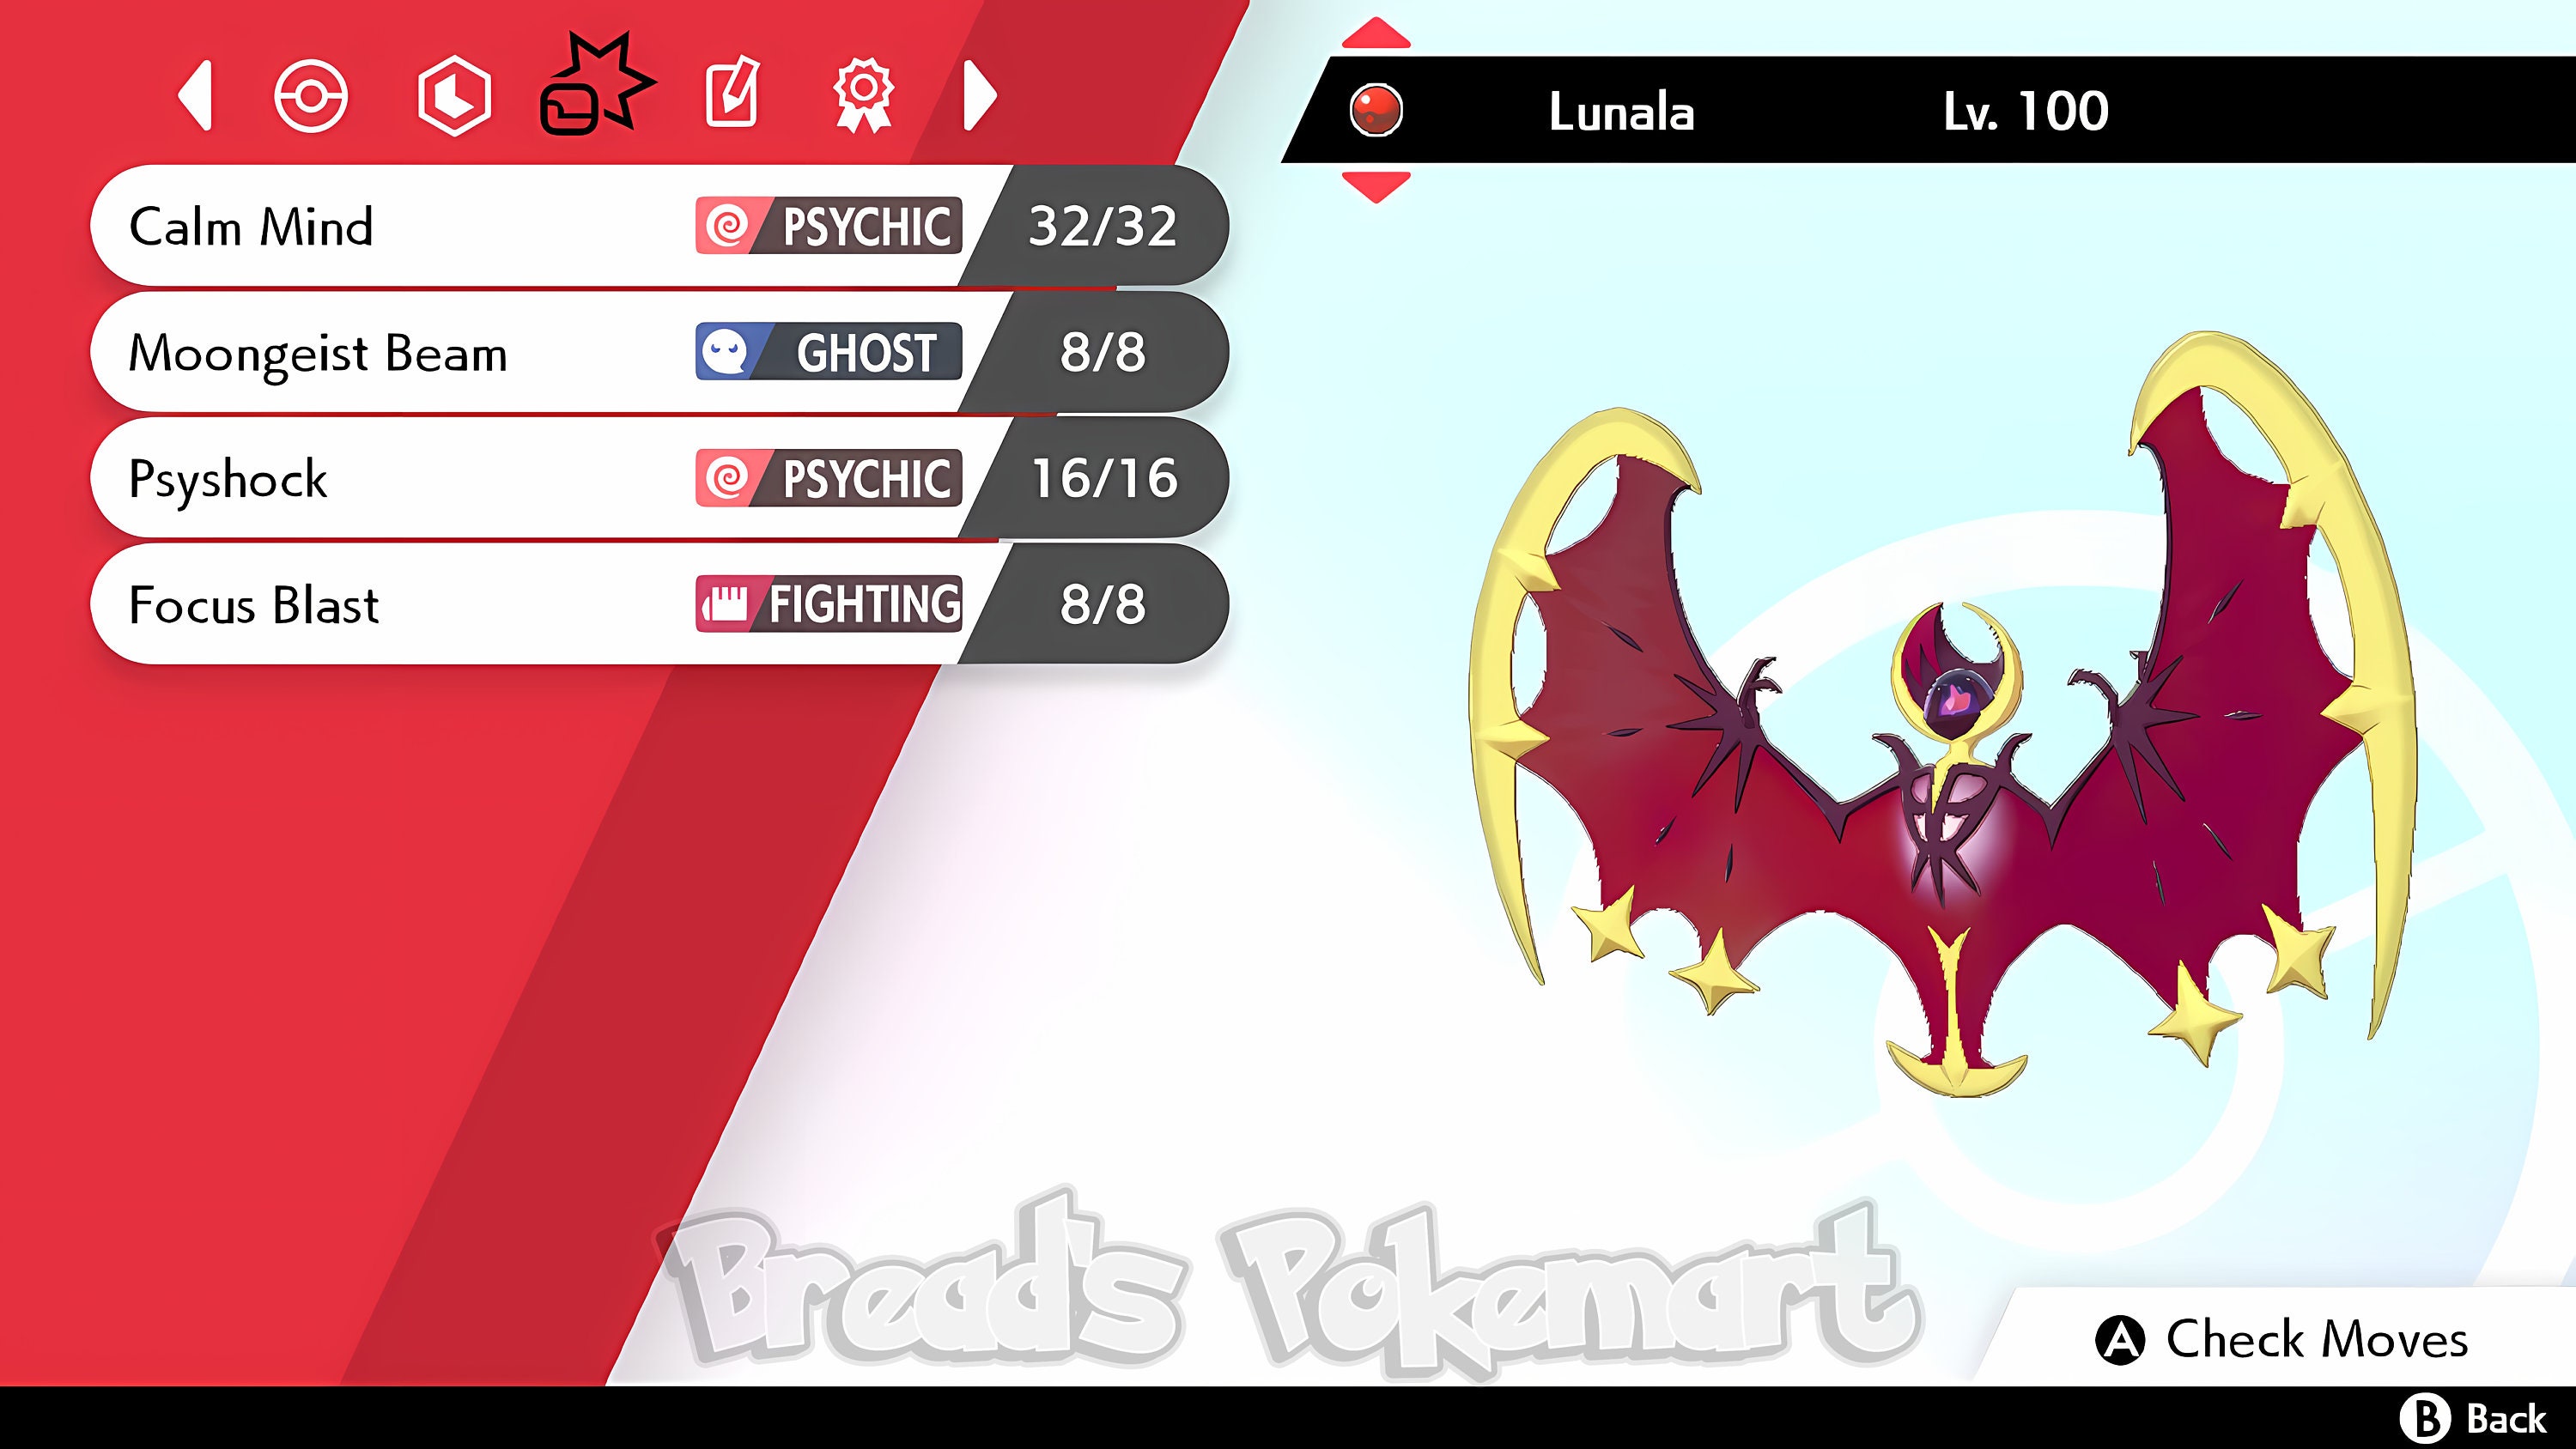 Pokémon Legality on X: [VG] Shiny Solgaleo & Shiny Lunala are now  available within a Cherish Ball Details:  &   Battle Spot ✓ VGC 2019 ✓  /  X